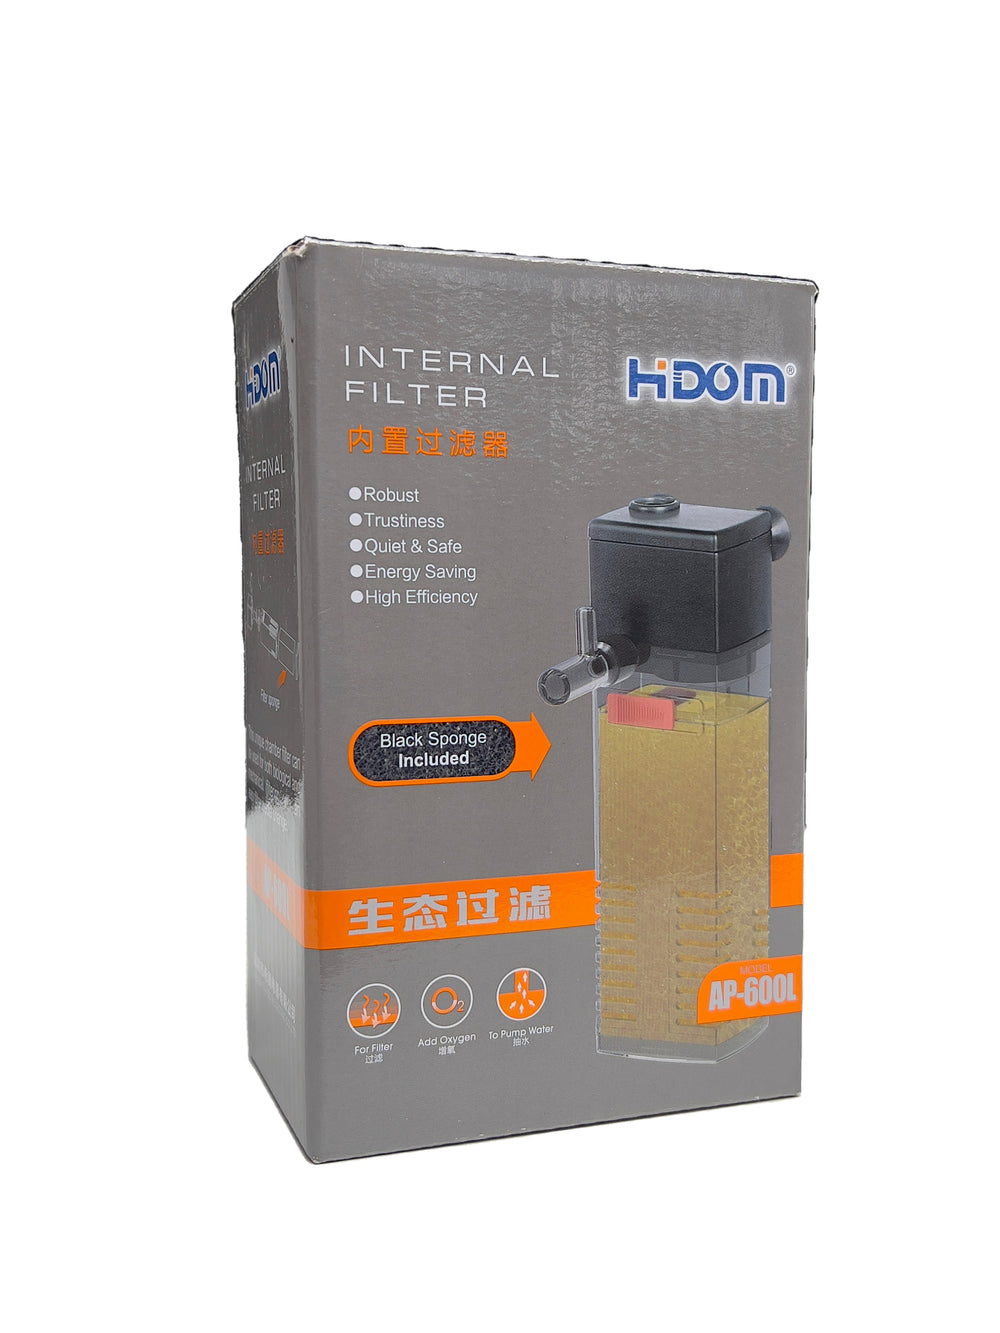 Hidom AP-600 L Internal Filter - nepalaquastudio